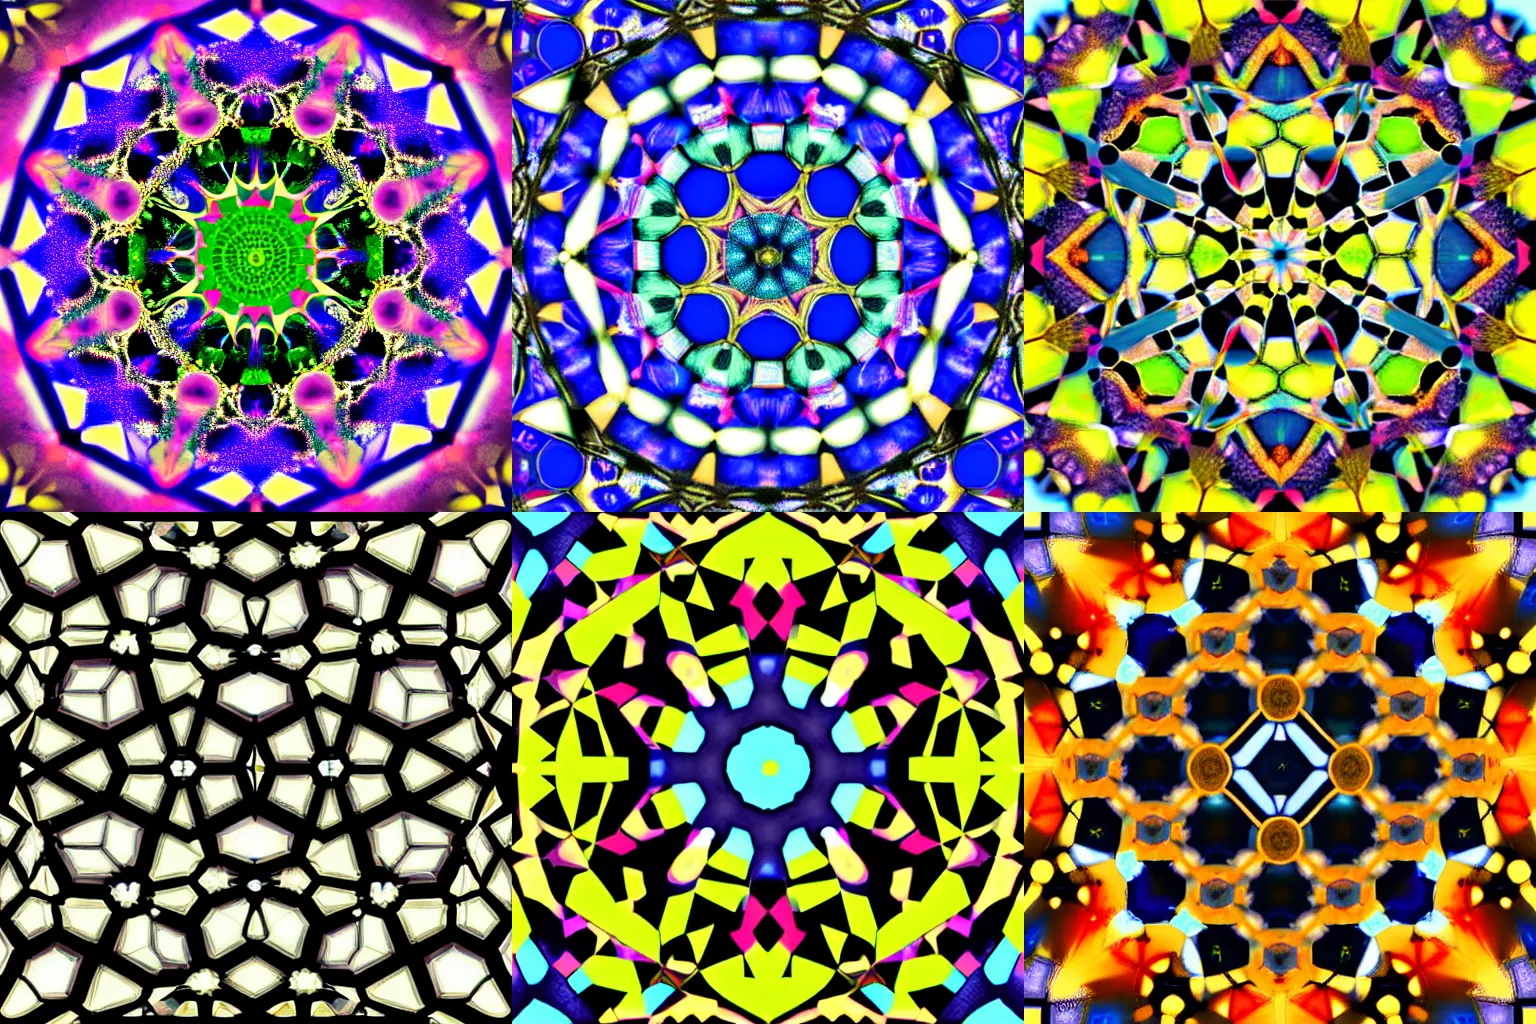 Prompt: view through kaleidoscope, hexagonal segments, fractals